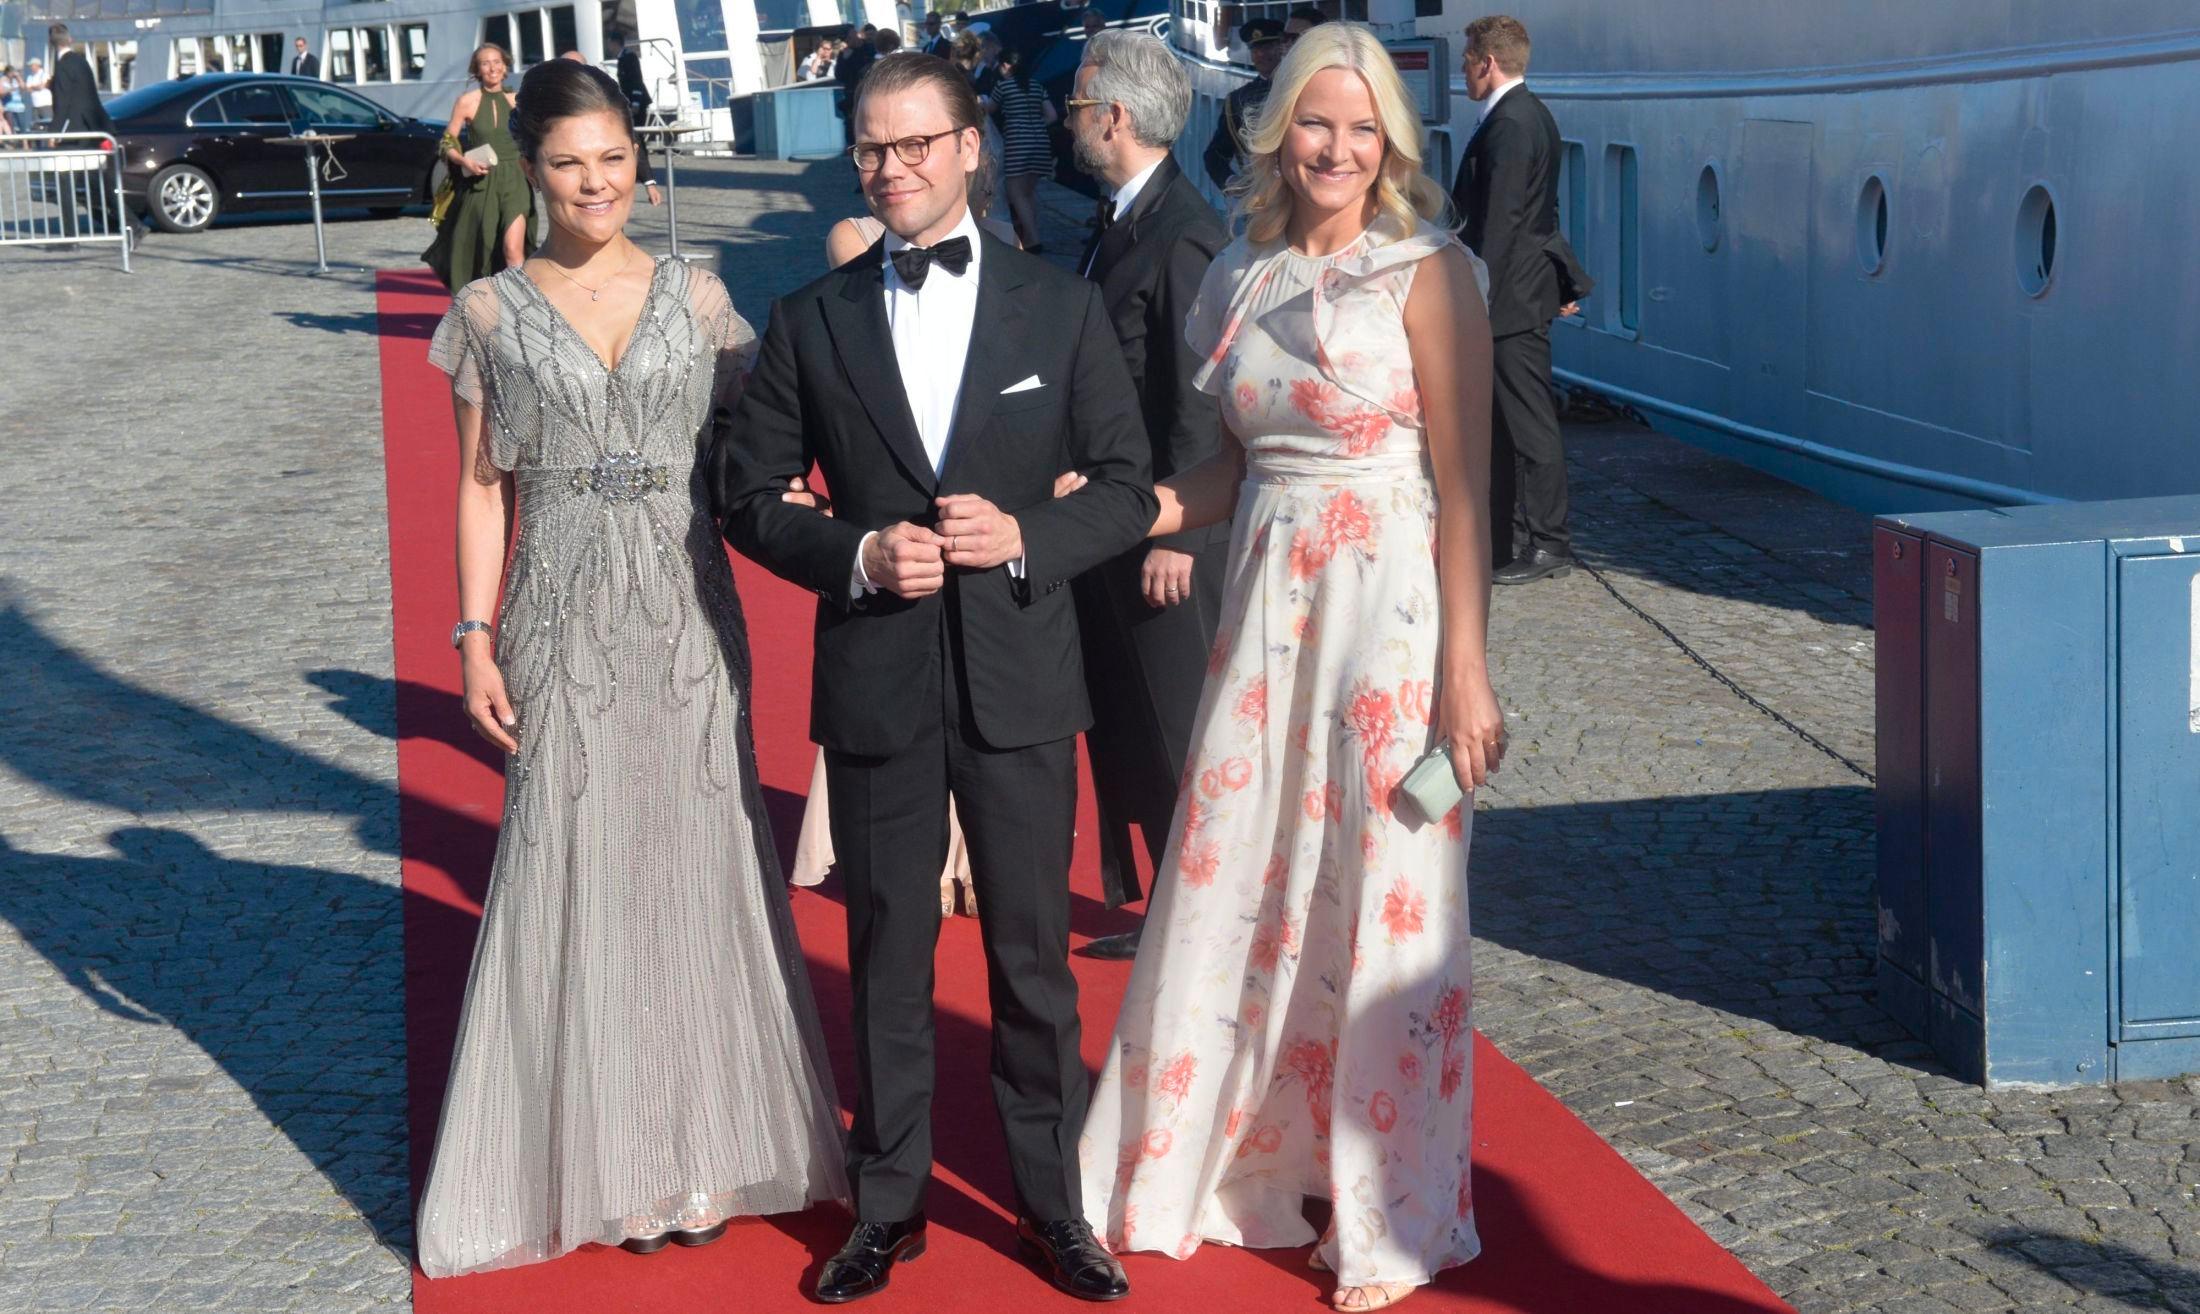 GODE VENNER: Kronprins Haakon kom senere enn de andre til festen, så Mette-Marit kom sammen med kronprinsesse Victoria, og prins Daniel. Foto: NTB scanpix